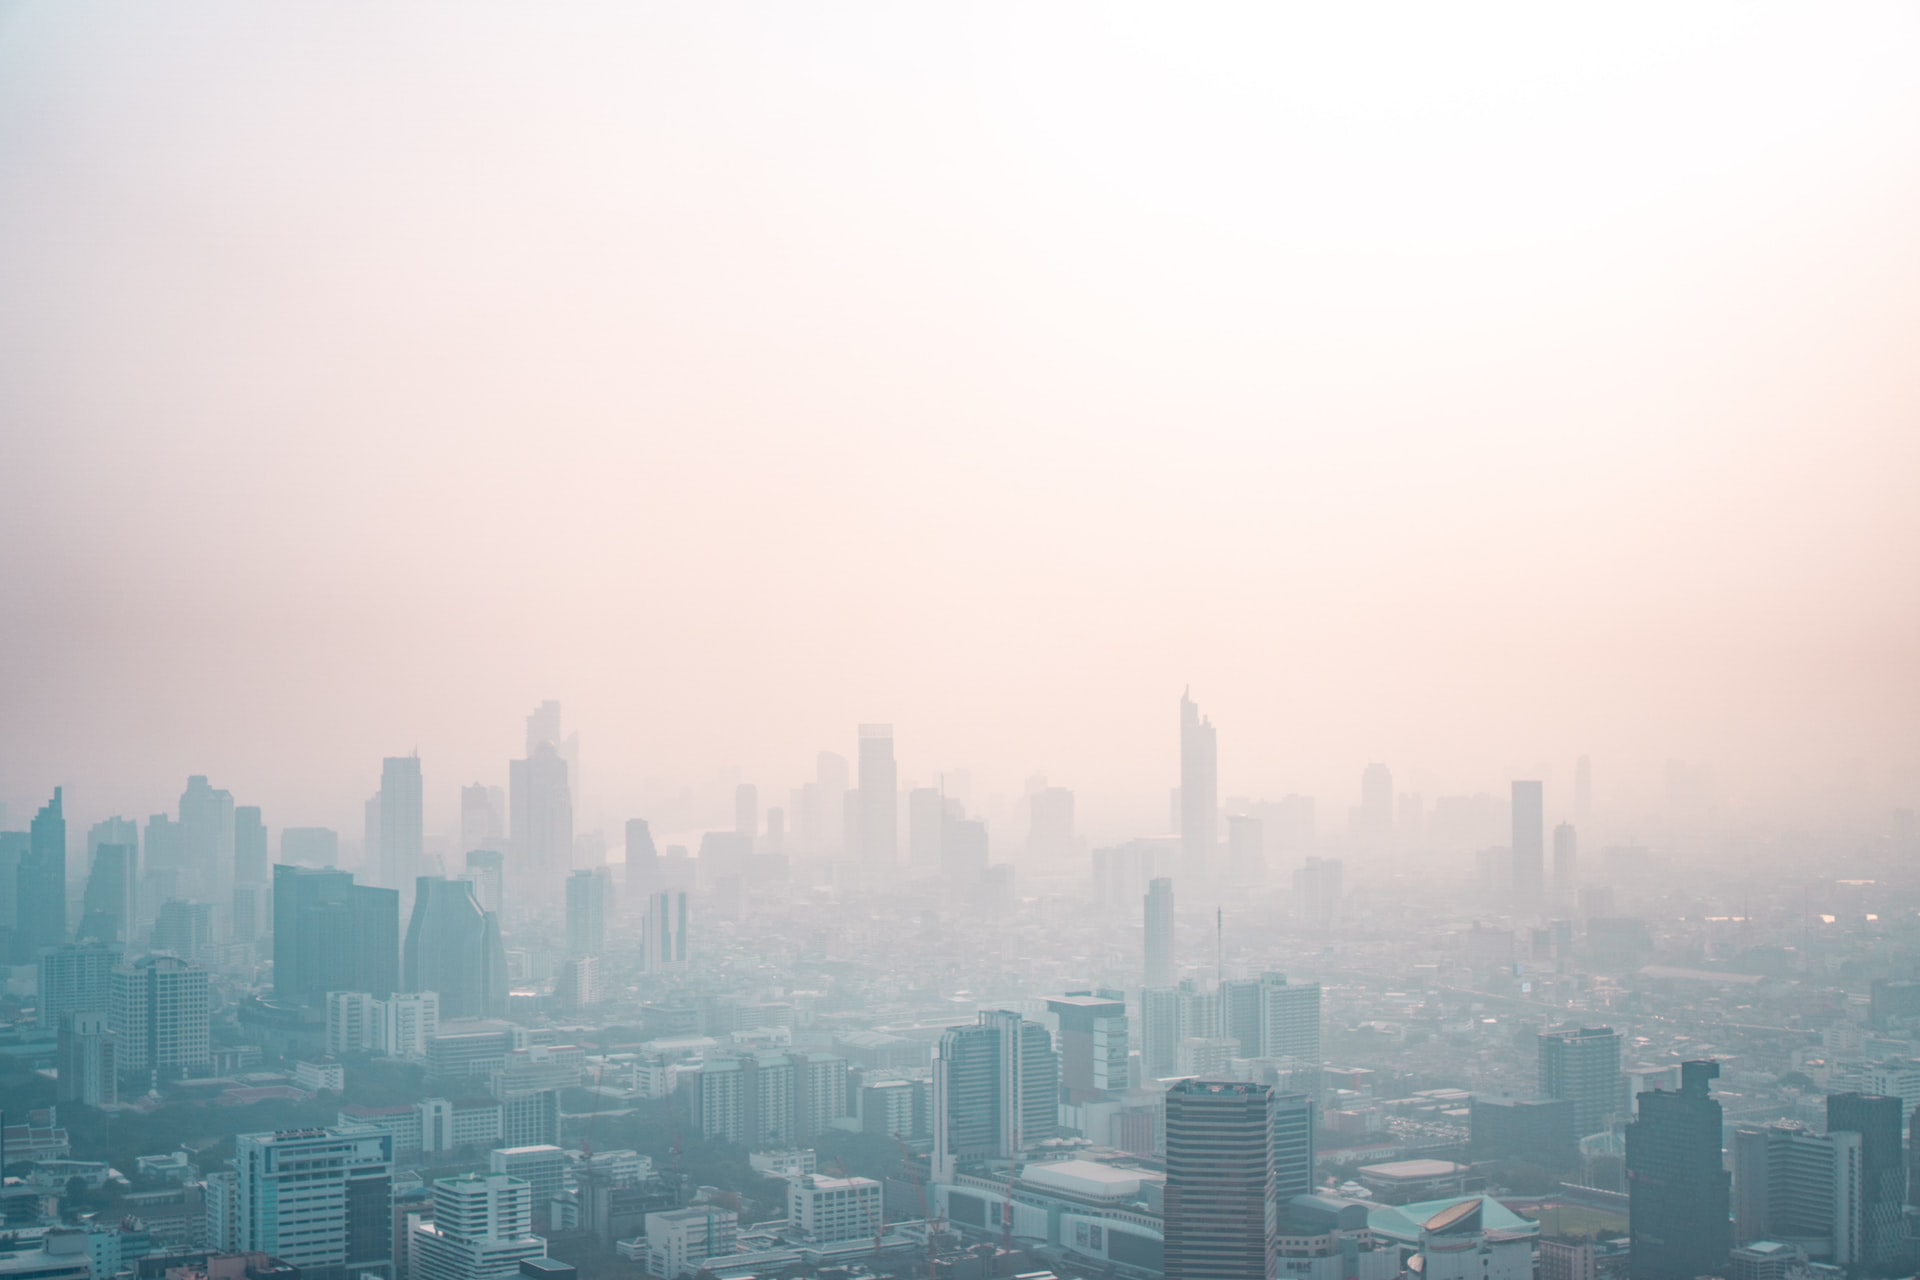 smogged city skyline - License: © Nick van den Berg